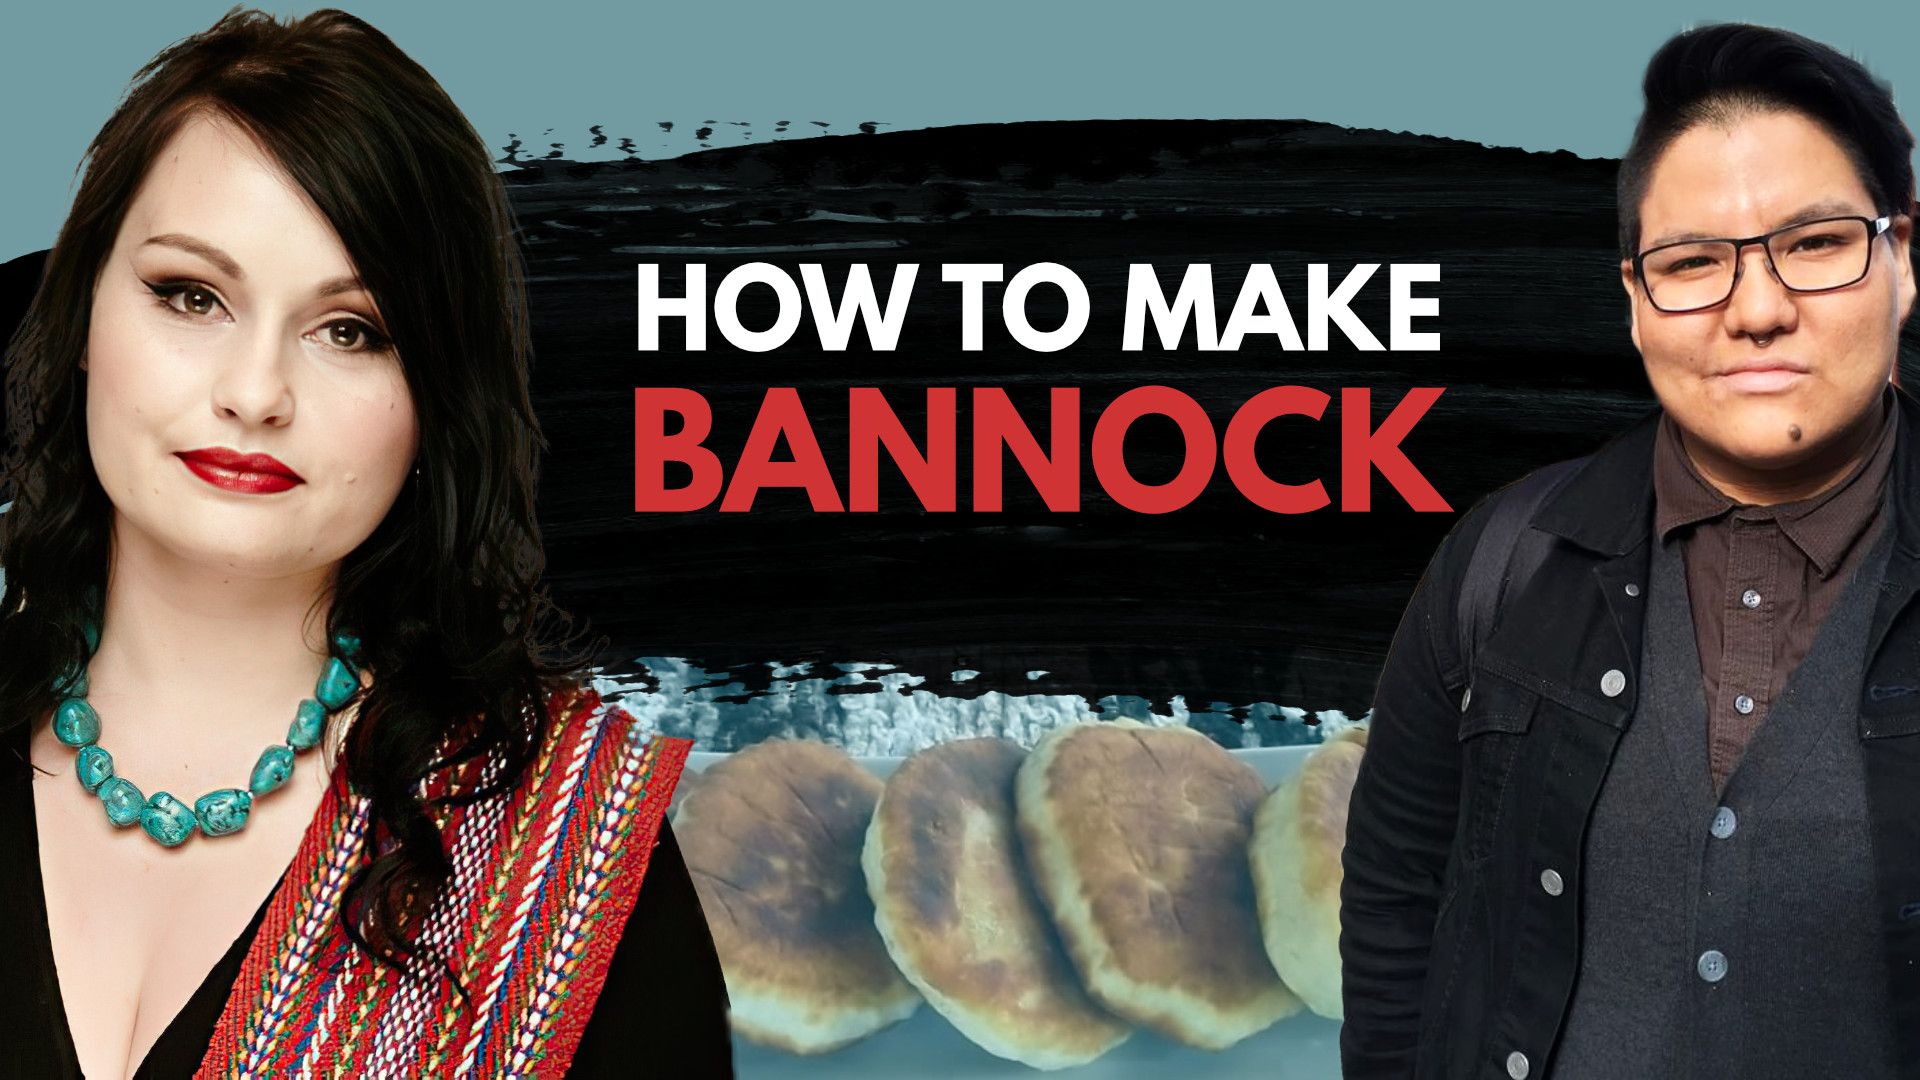 How to Make Bannock